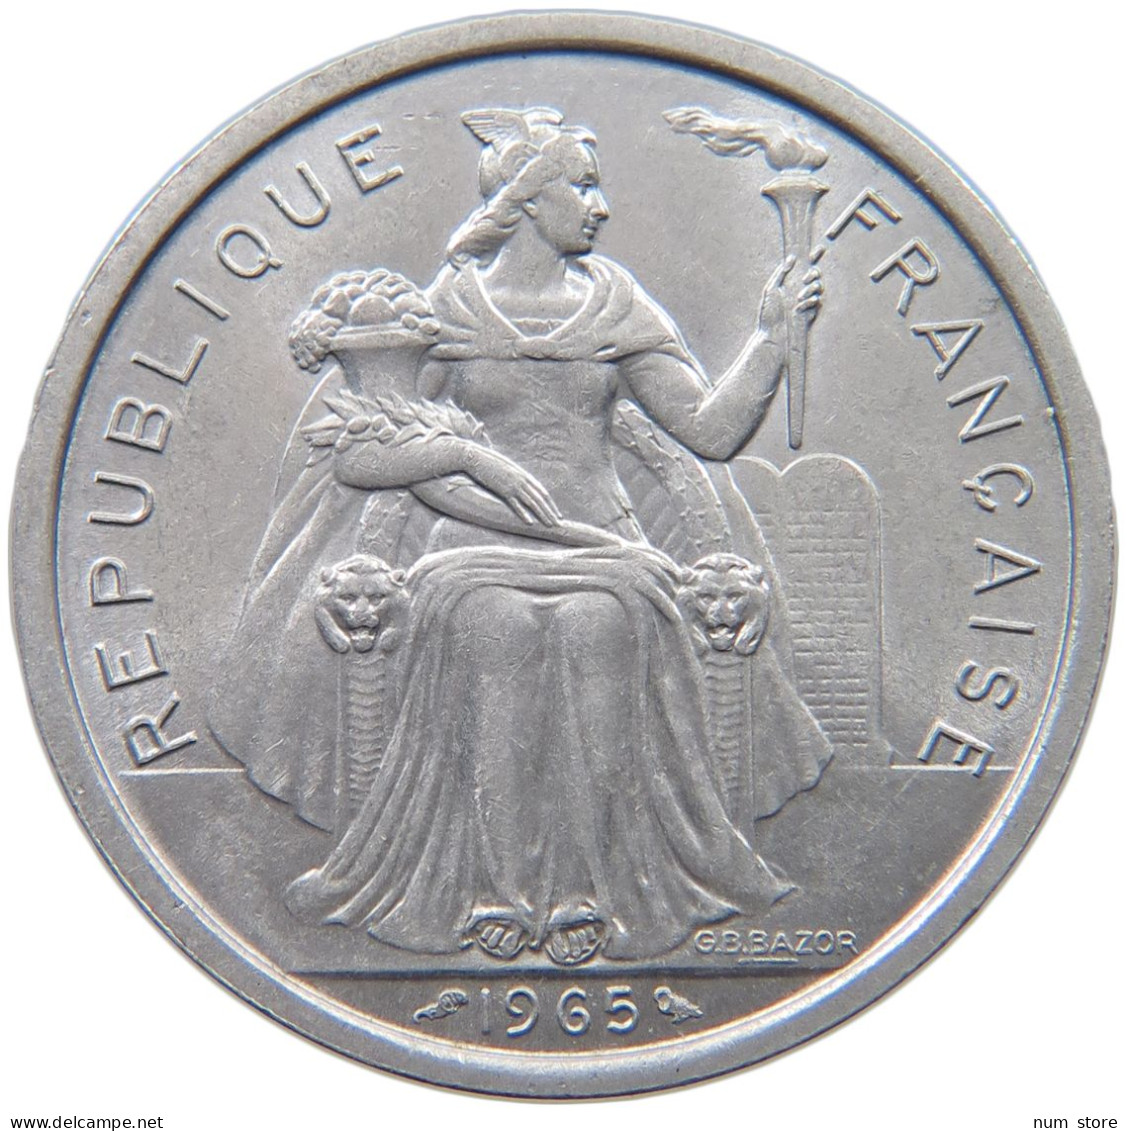 POLYNESIA 5 FRANCS 1965  #c001 0279 - Polinesia Francesa